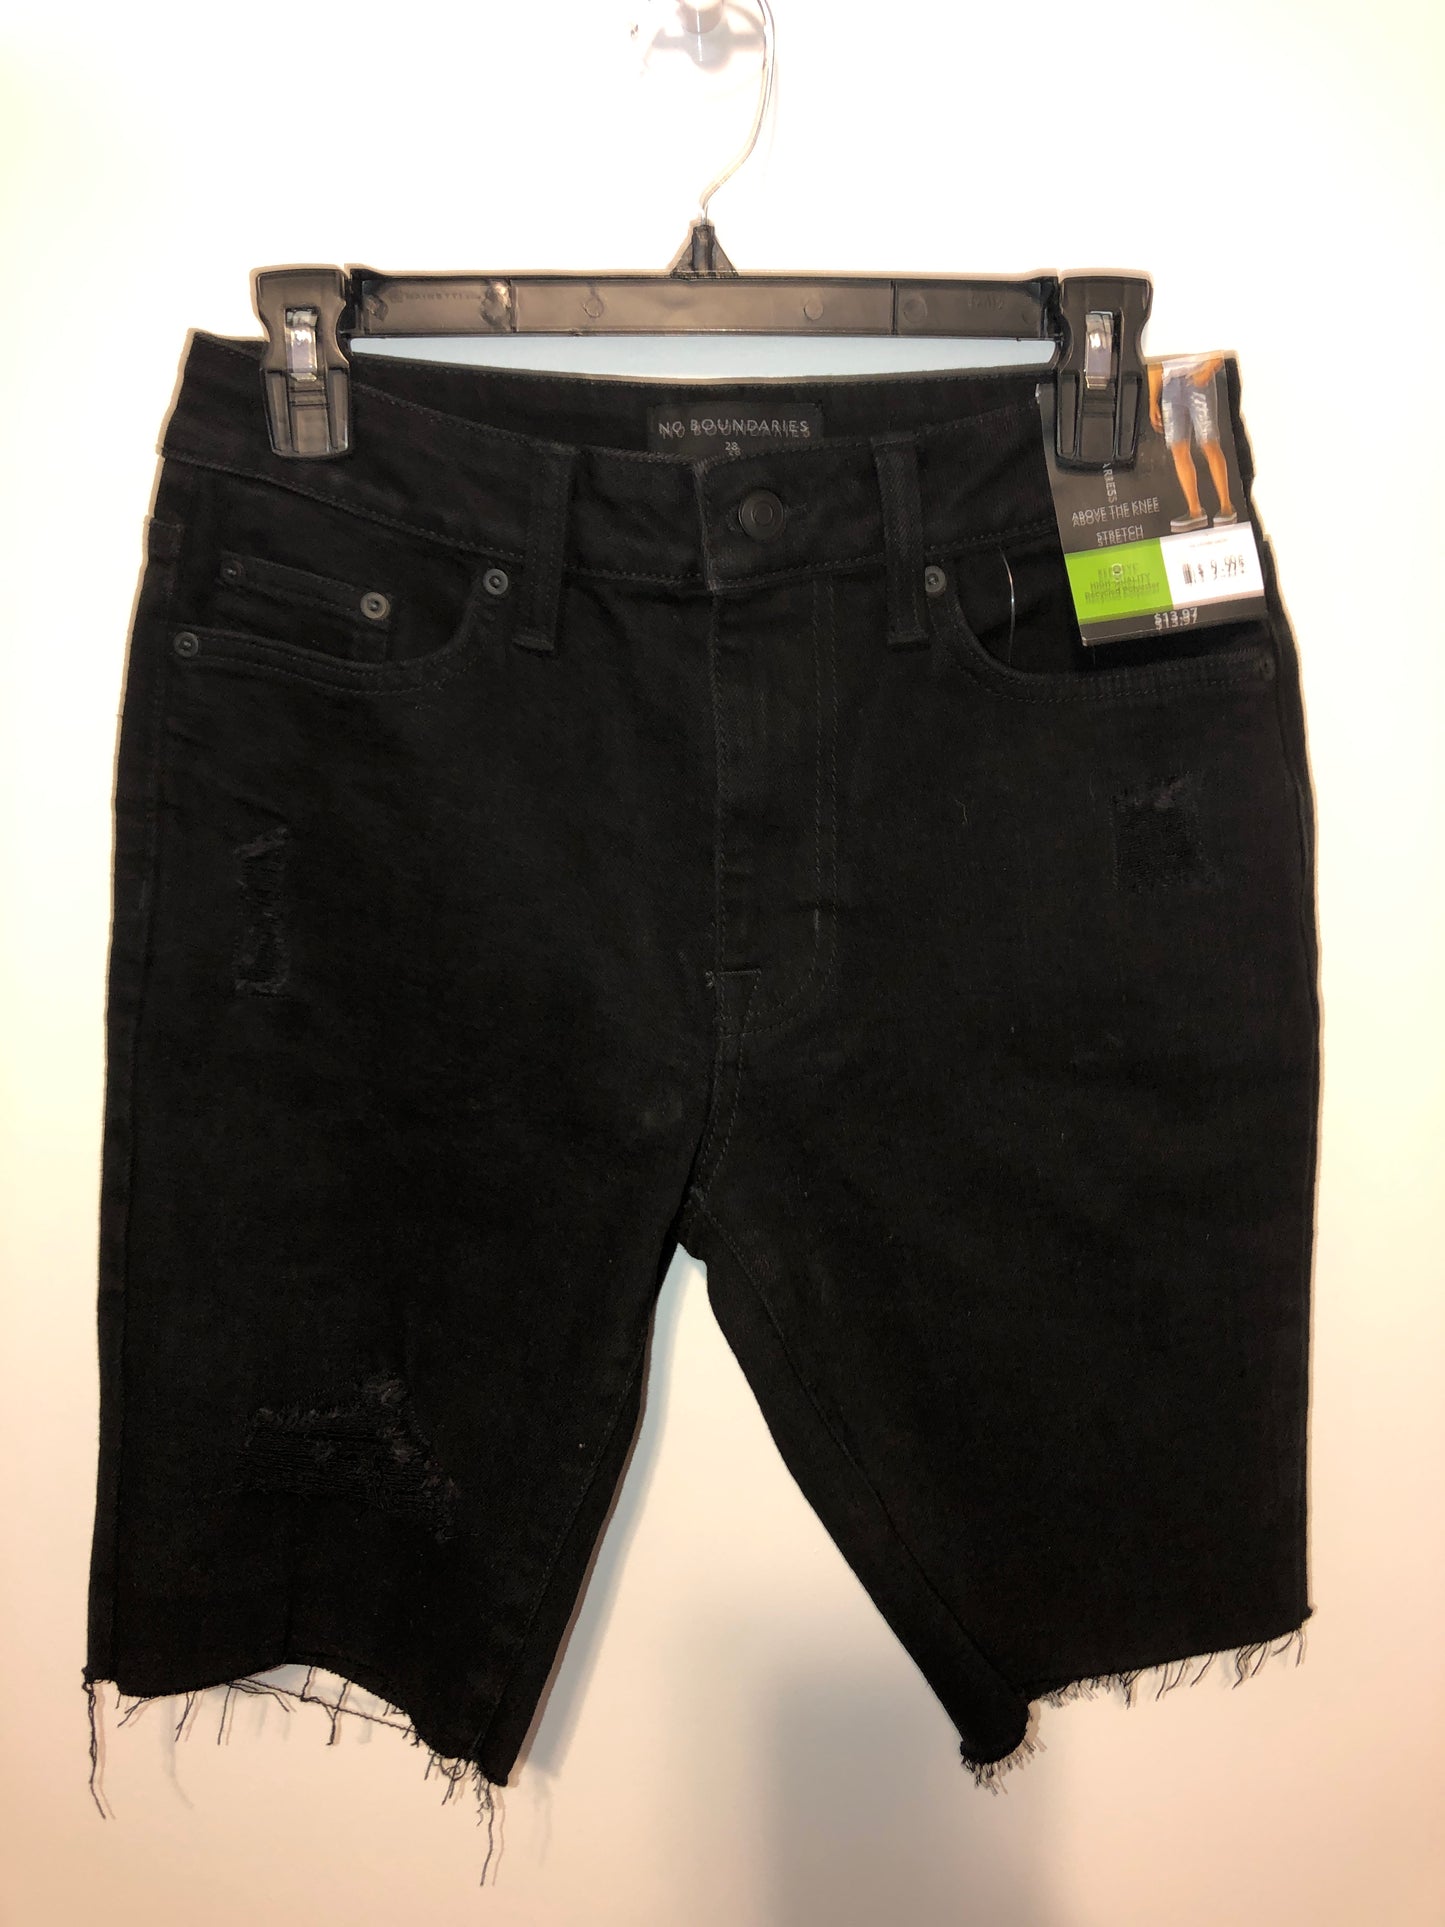 Young men’s Black Jean Shorts